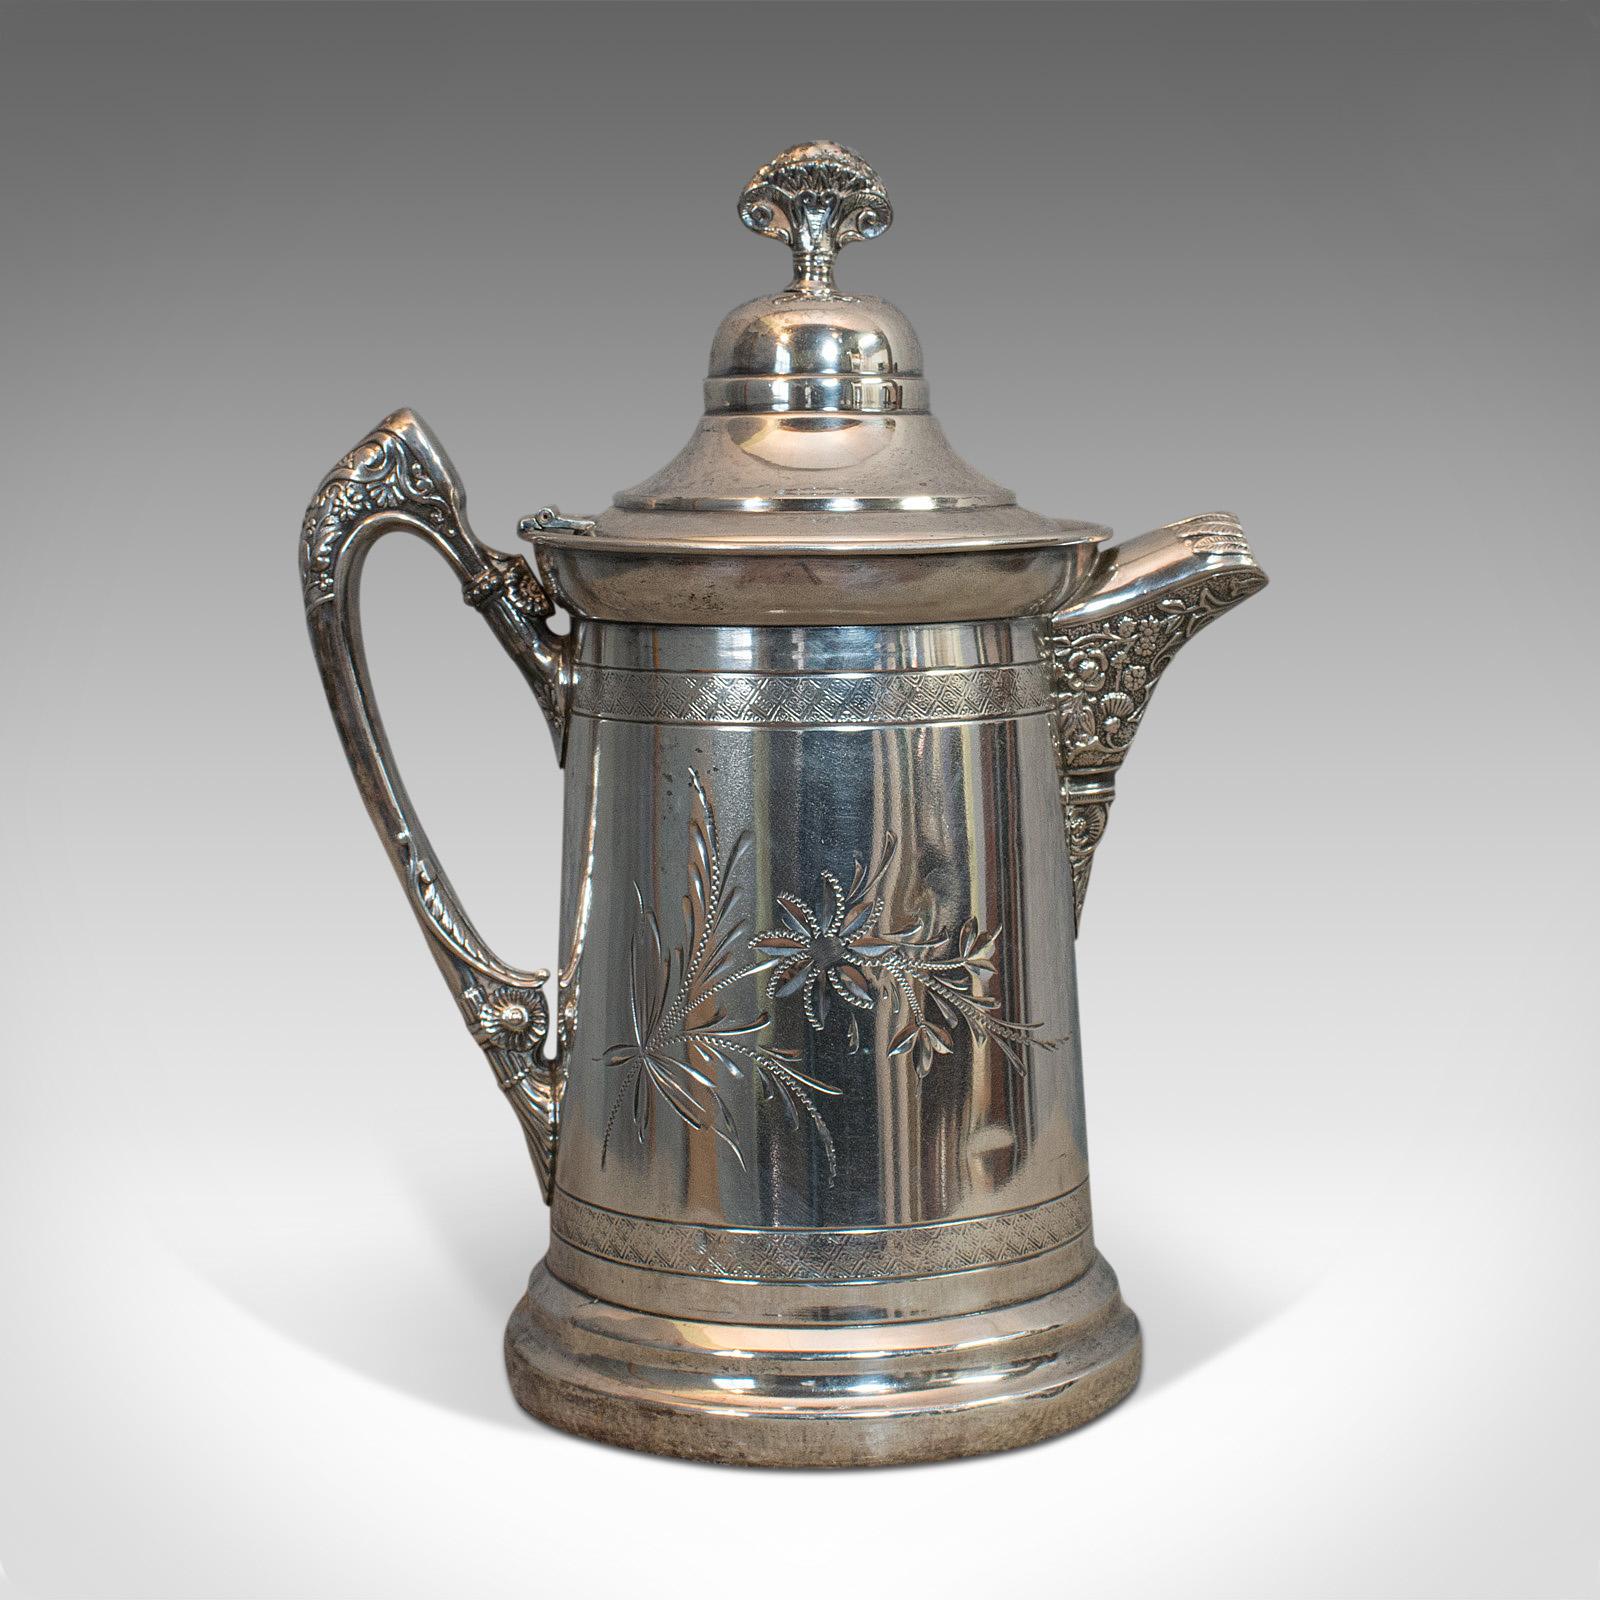 Victorian Antique Coffee Pot, English Silver Plate, Beverage Jug, 19th Century, circa 1900